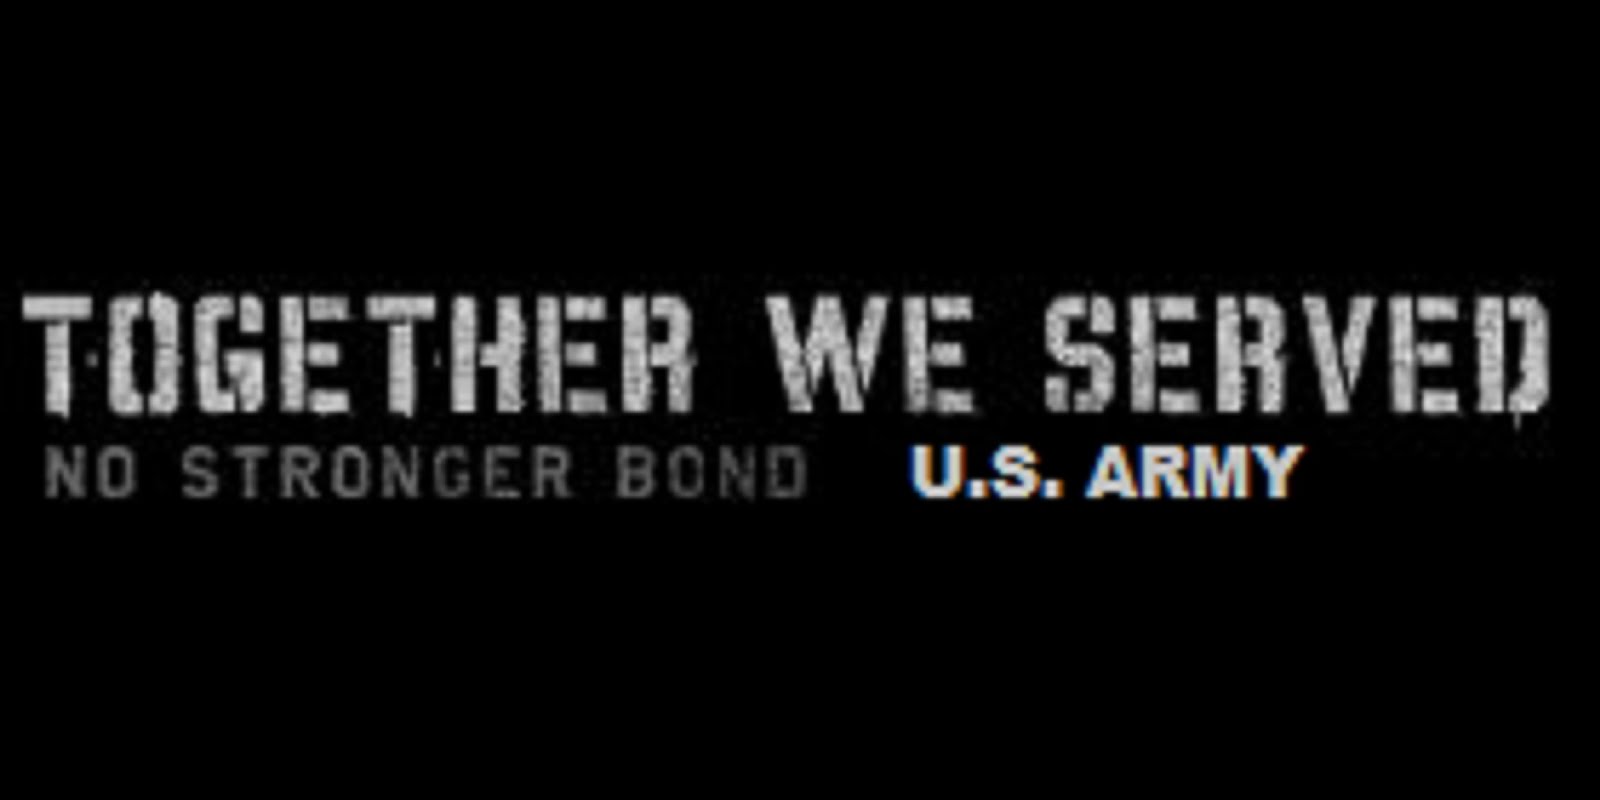 TOGETHER WE SERVED NO STRONGER BOND U.S. ARMY